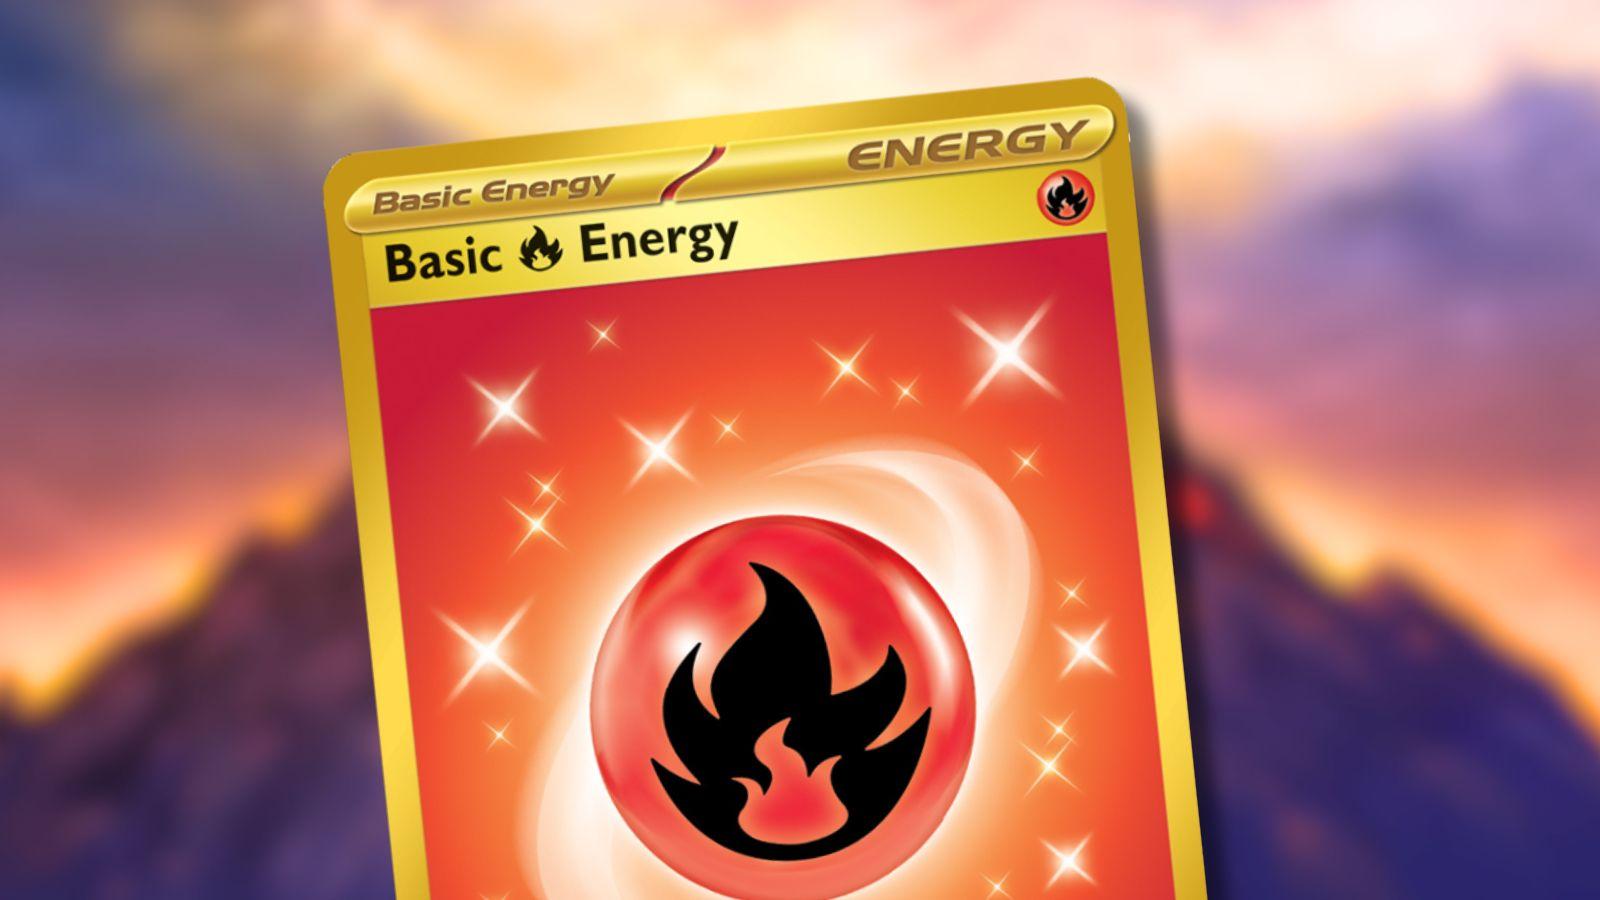 Fire Energy Pokemon card against volcano background.